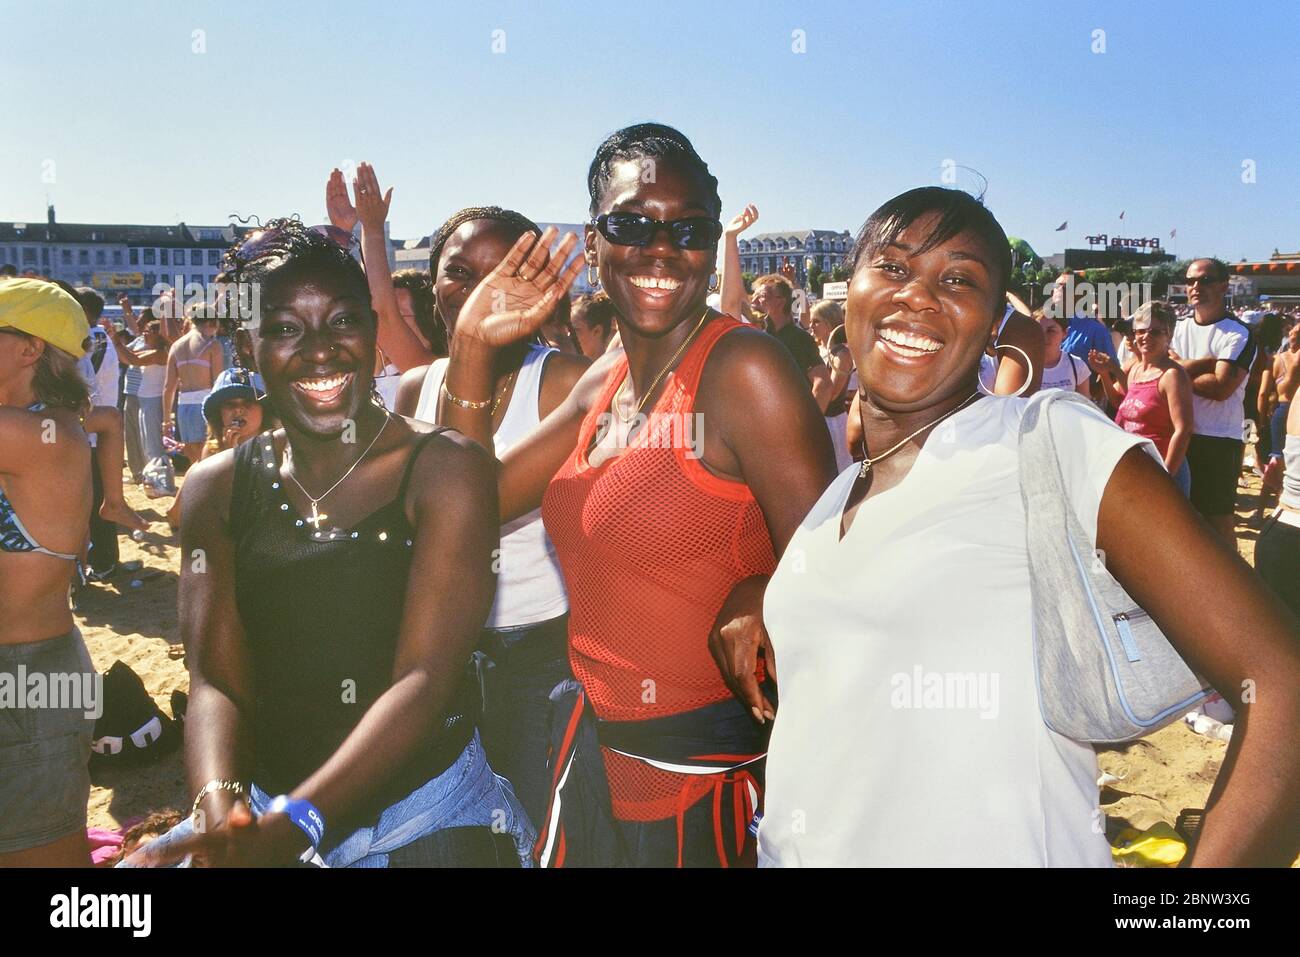 Smiling, happy & waving at the camera Afro-Caribbean teenage girls at a beach concert, Great Yarmouth, Norfolk, England, UK Stock Photo